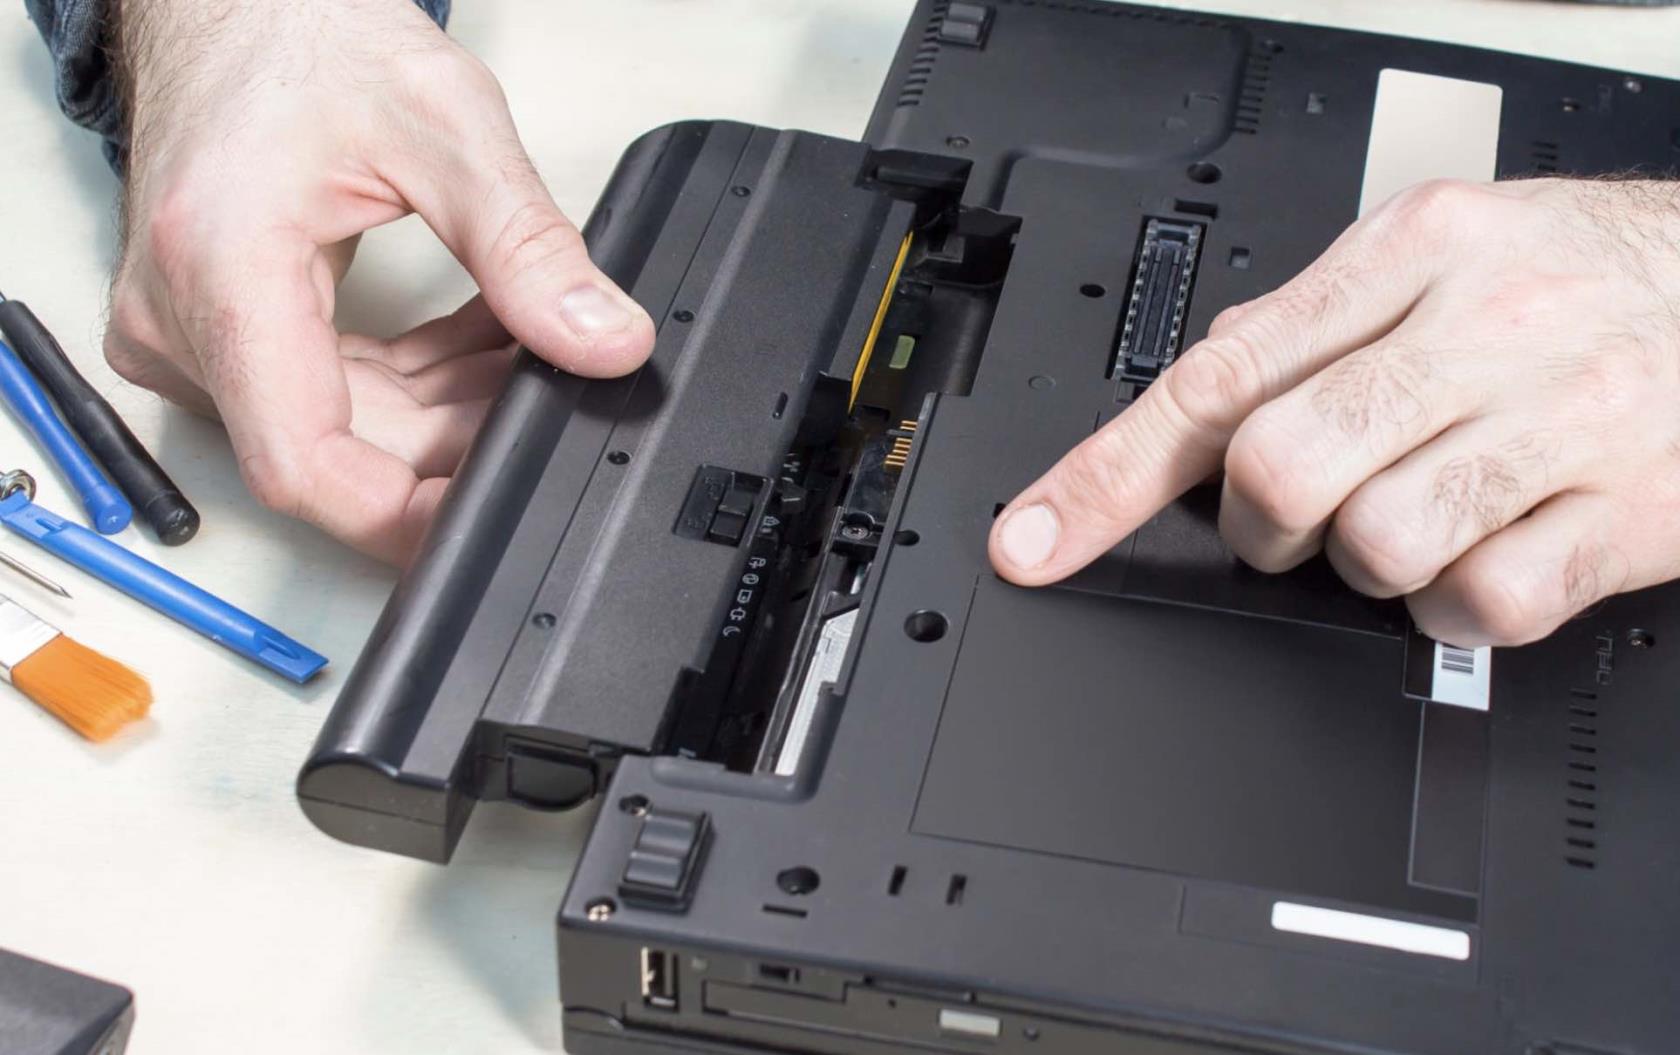 Panduan Periksa Bateri Laptop Paling Pantas Dan Berkesan Di Rumah